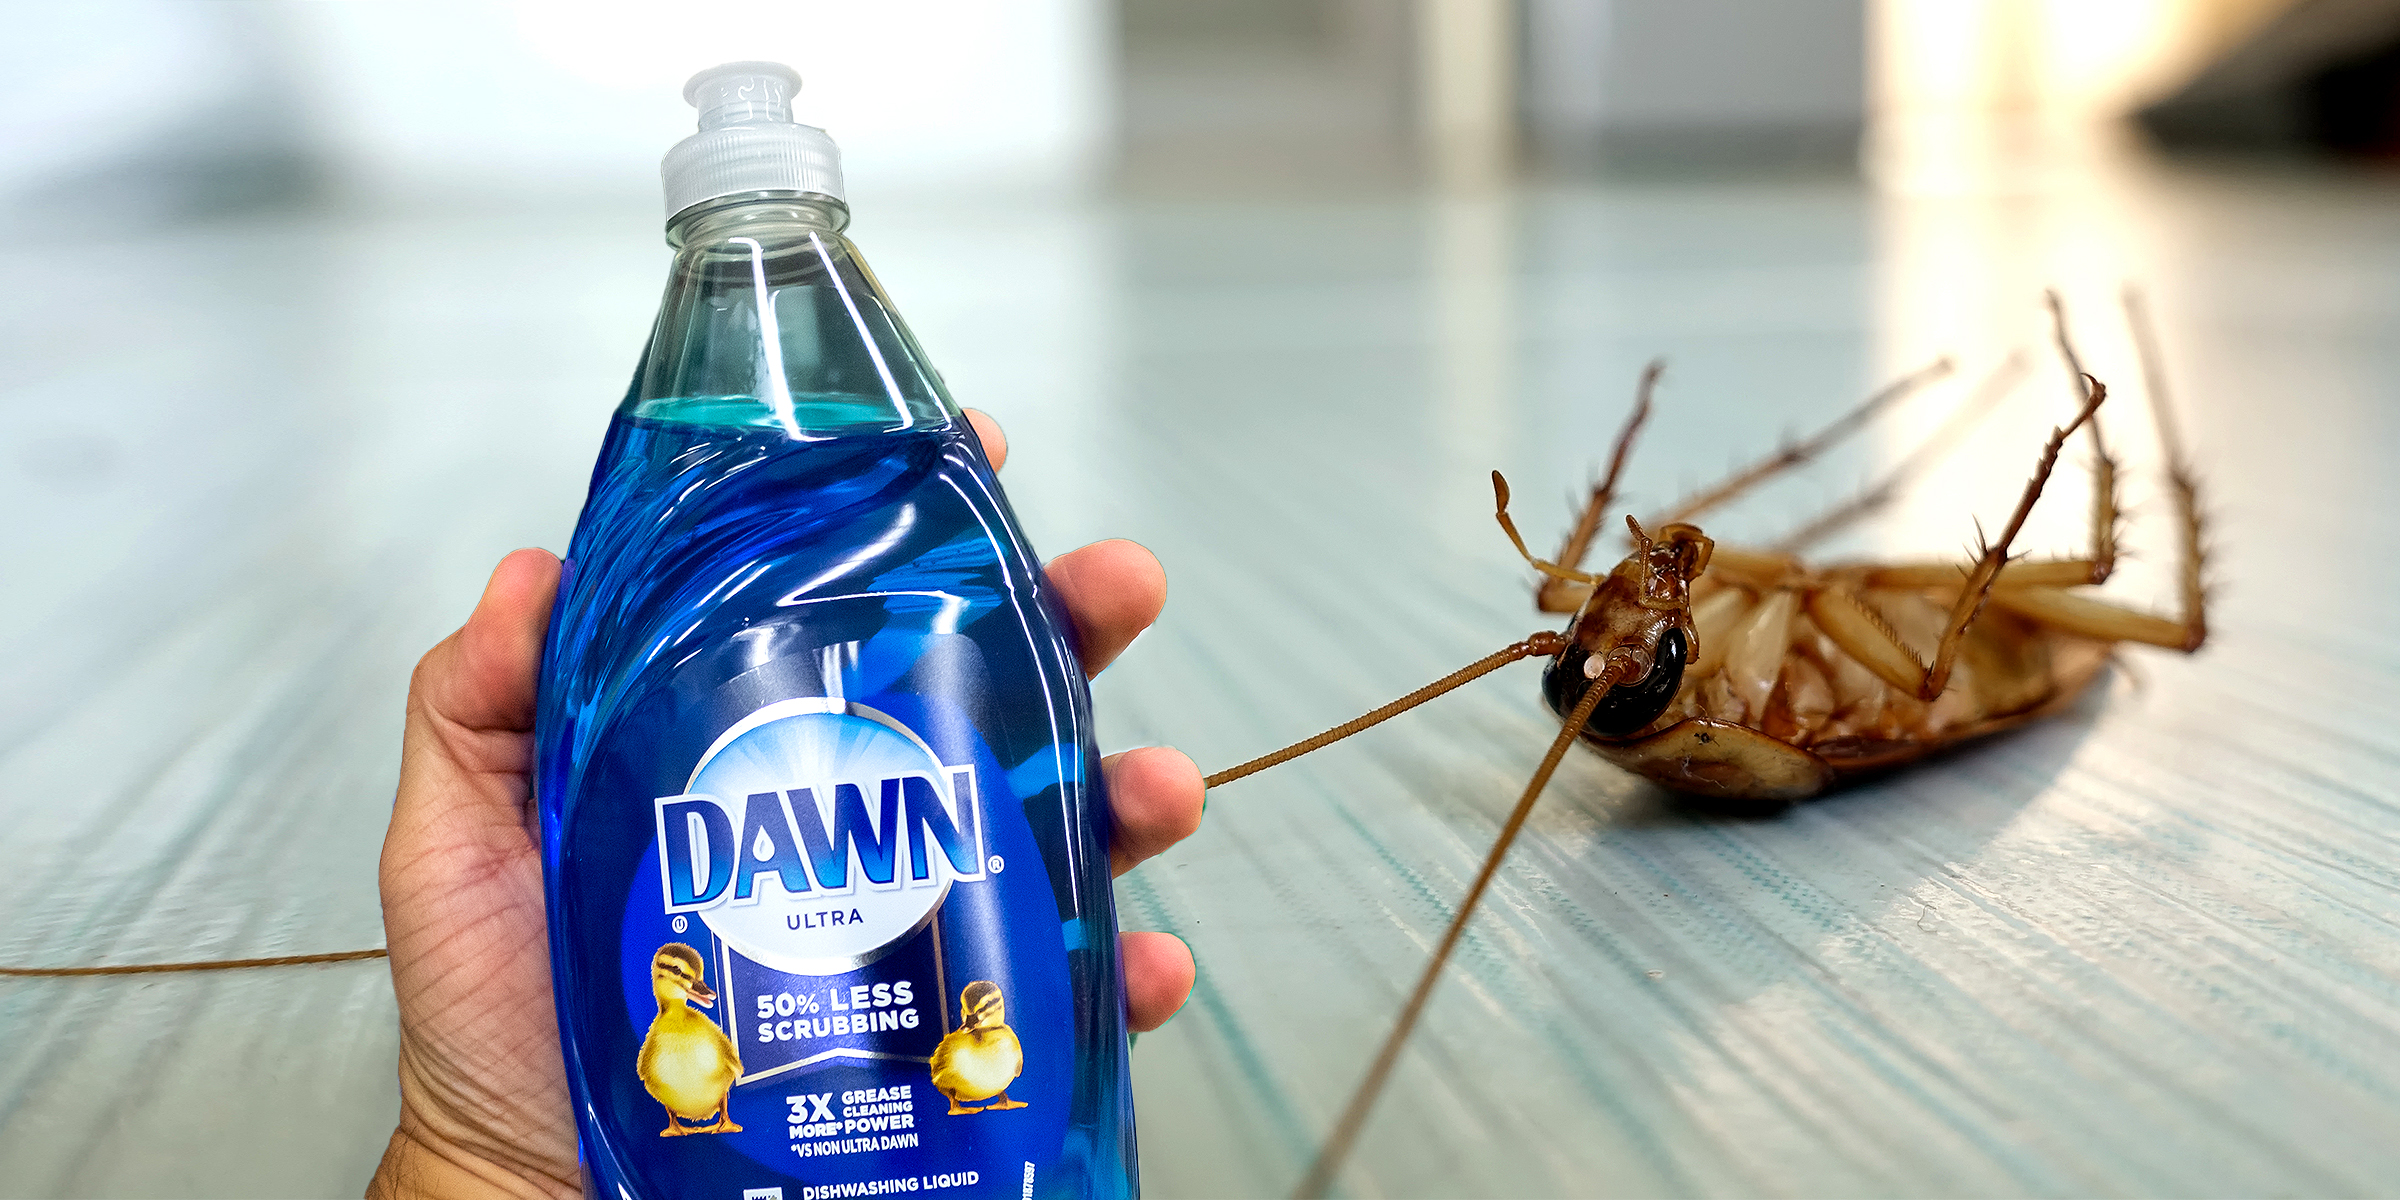 Dawn Dish soap | A cockroach | Source: Shutterstock